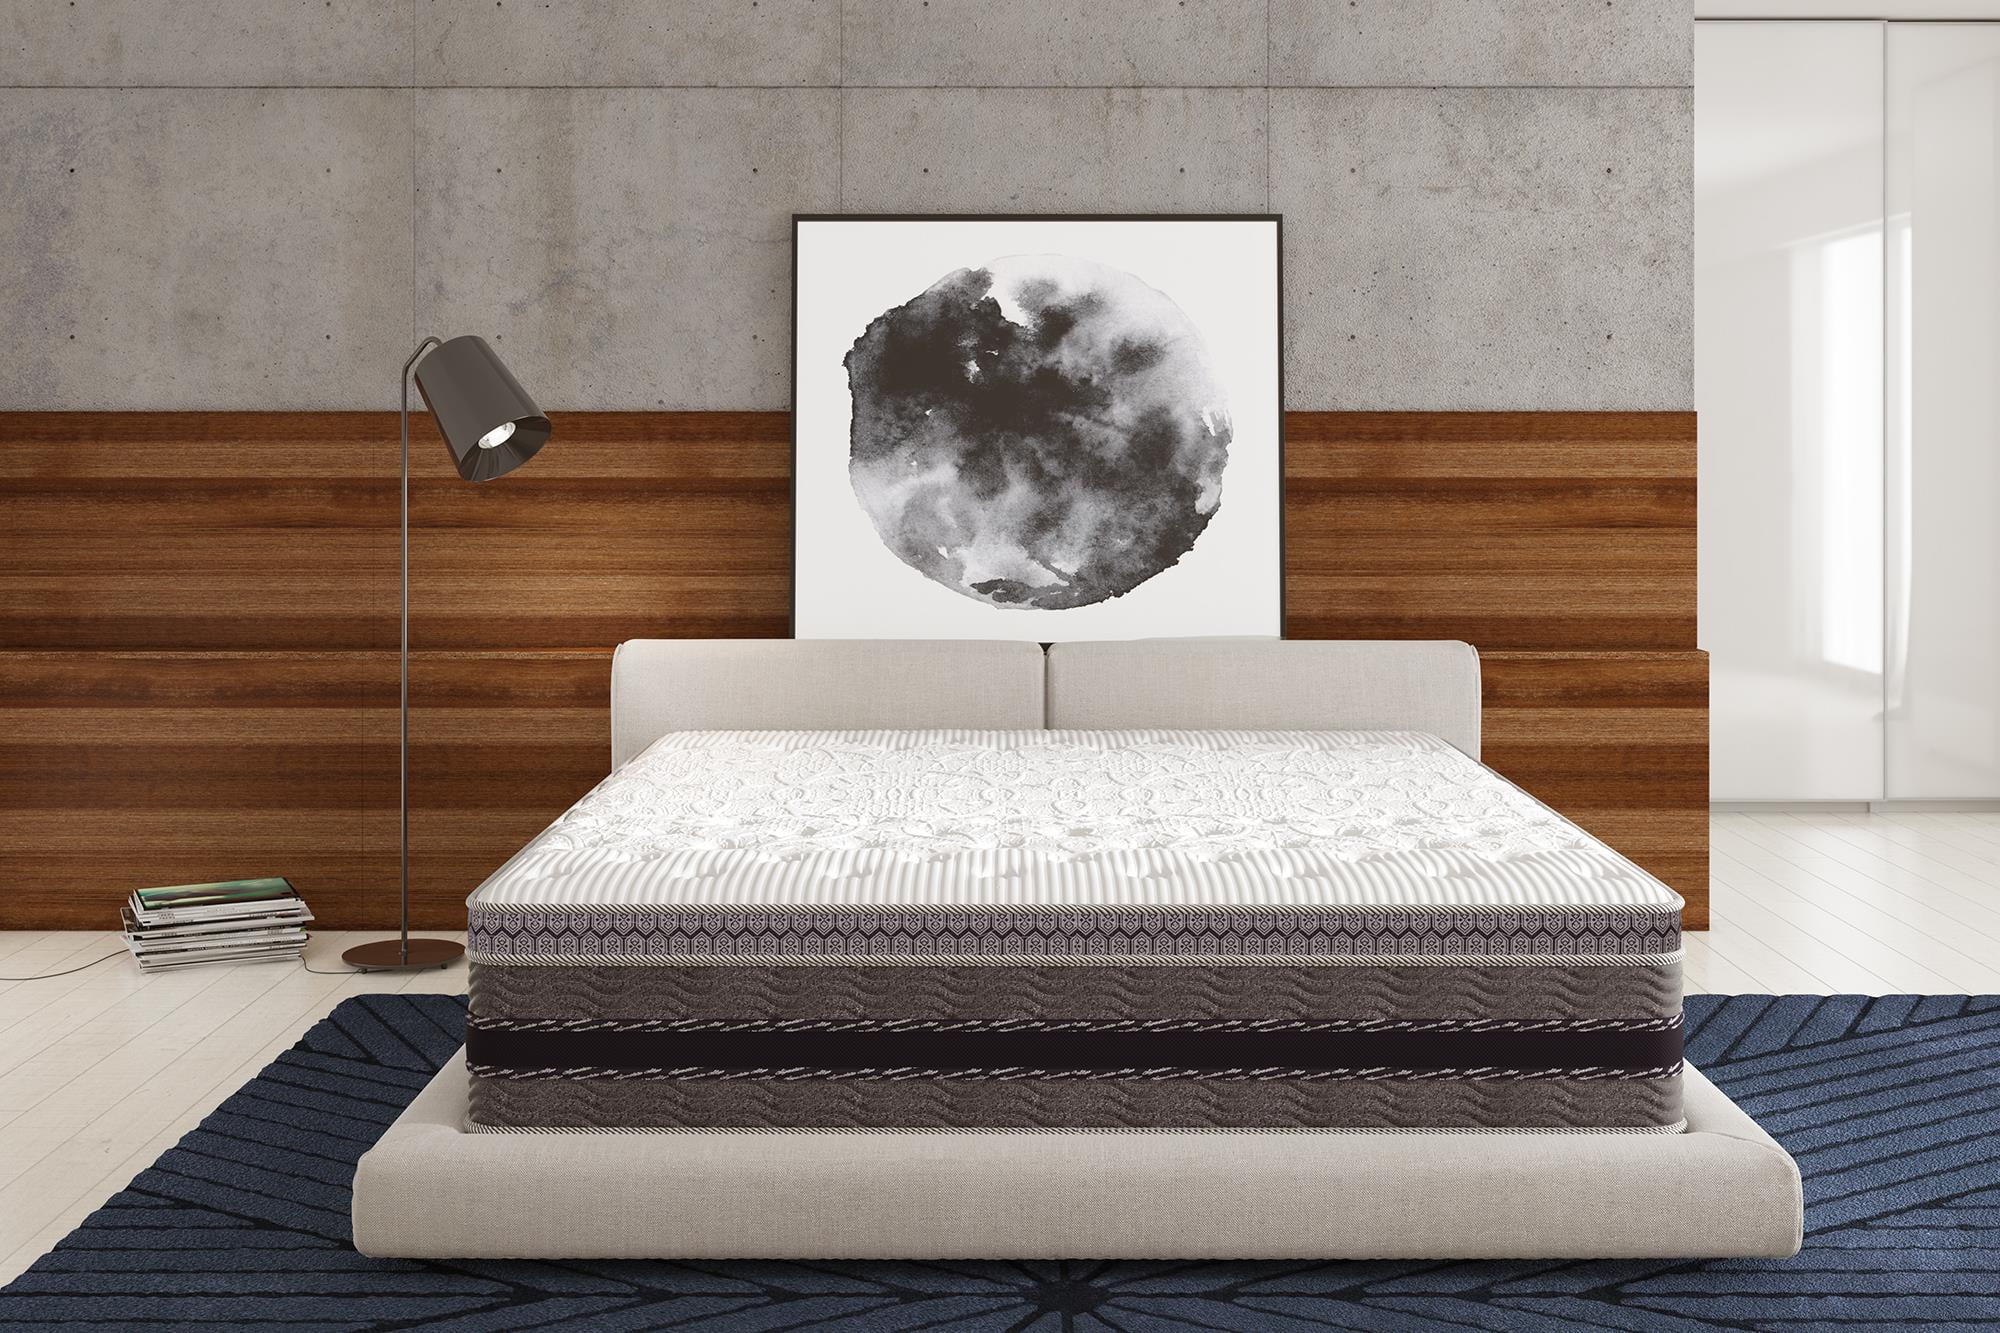 Skillful Manufacture Bed Rebonded Memory Foam Mattress - Buy Skillful  Manufacture Bed Rebonded Memory Foam Mattress Product on